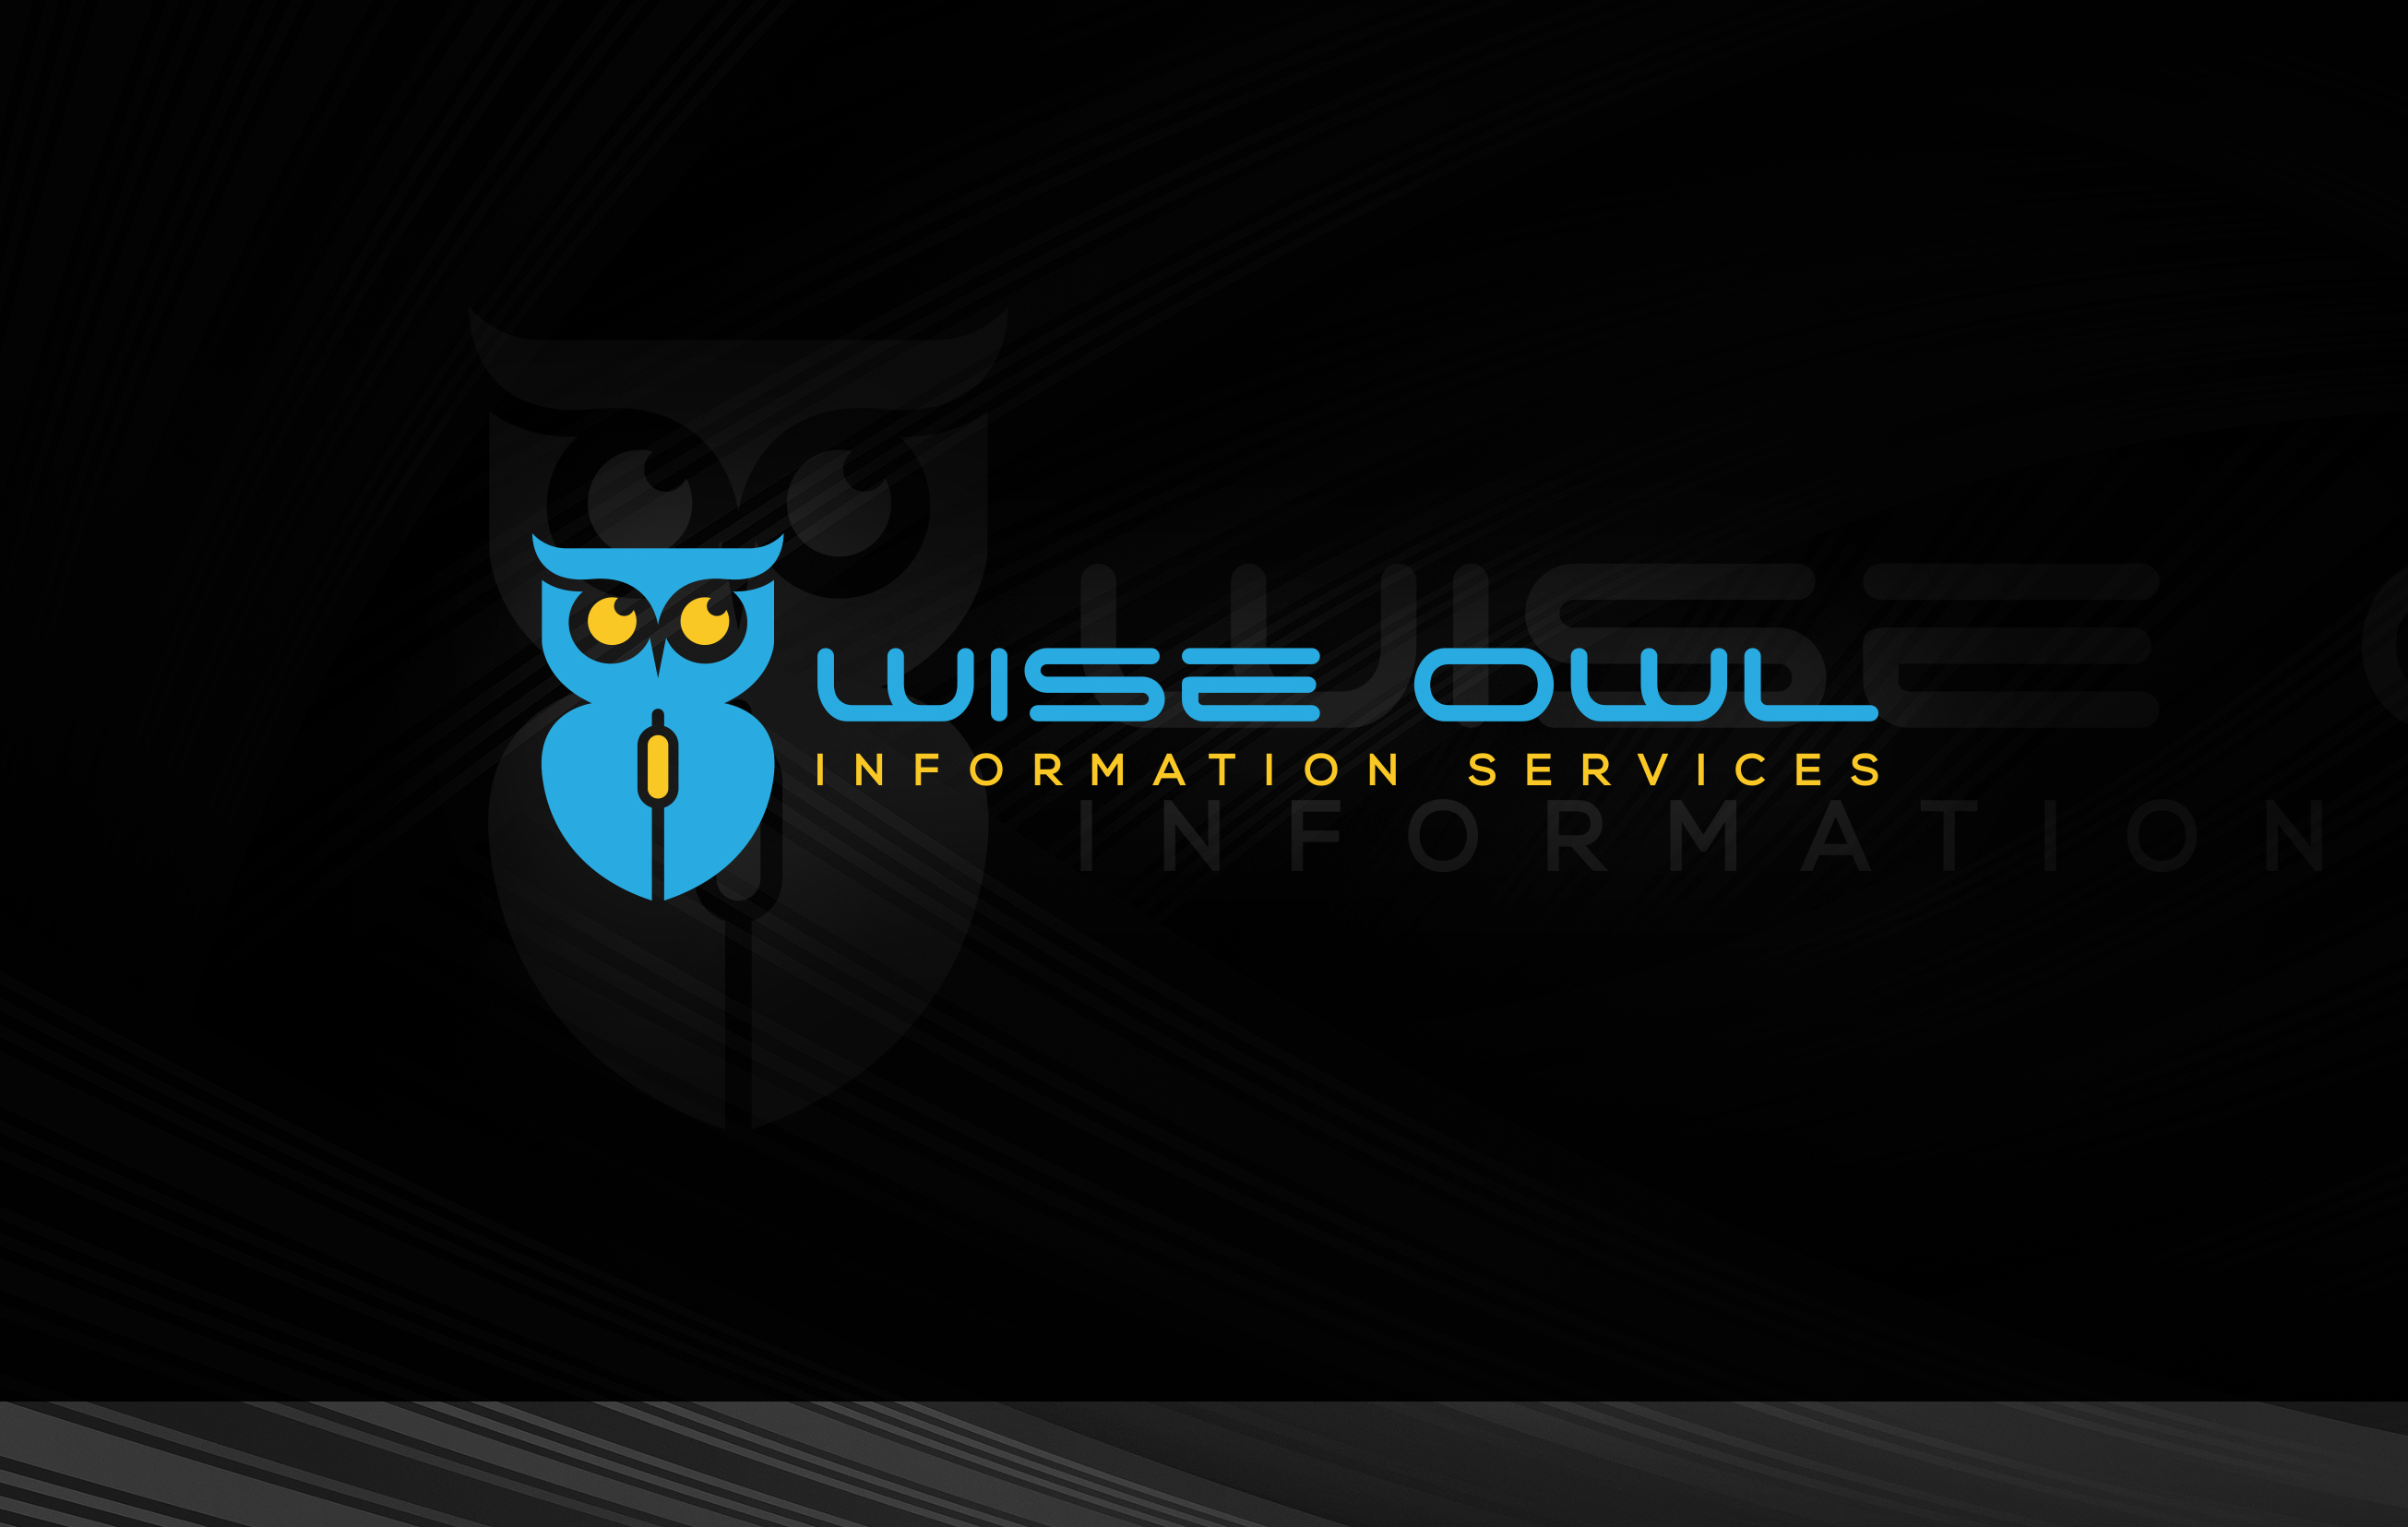 Wise Owl Information Services Design #2